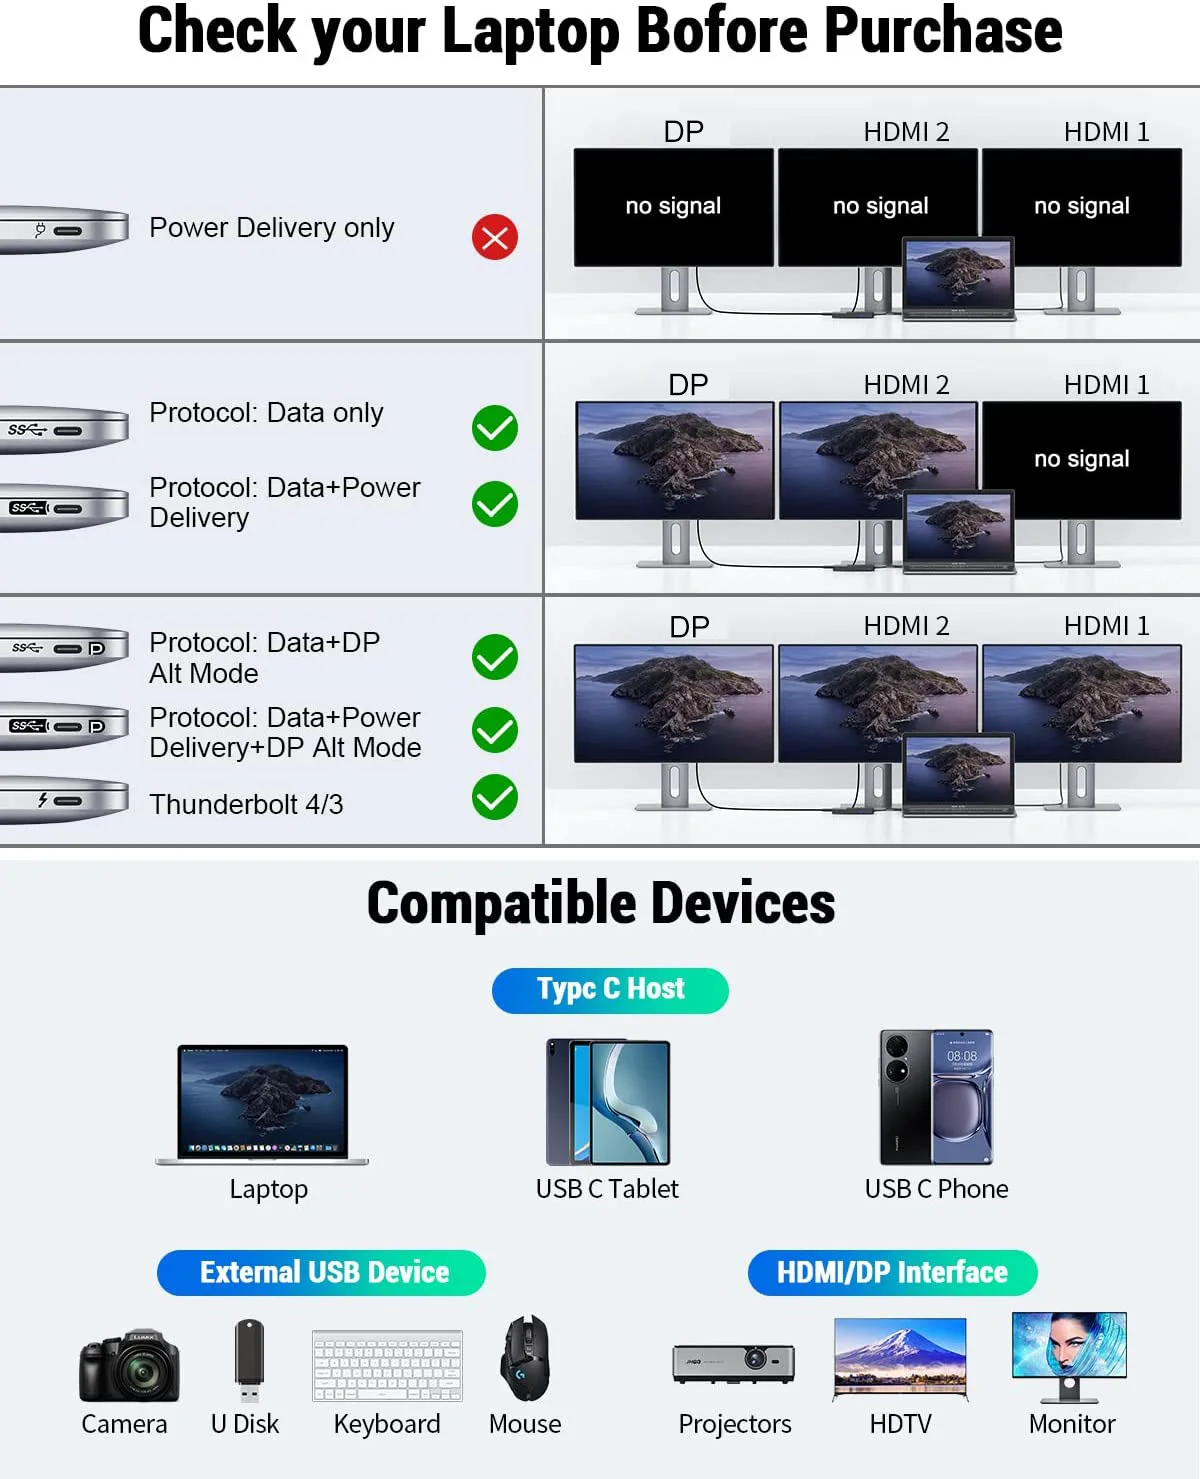 USB Type C displaylinkラップトップ,ドッキングステーション,デュアルHDMI,dp 4kアダプターハブ,Lenovo  thinkpad,hp,dell xps,m1,m2,macbook,usb AliExpress